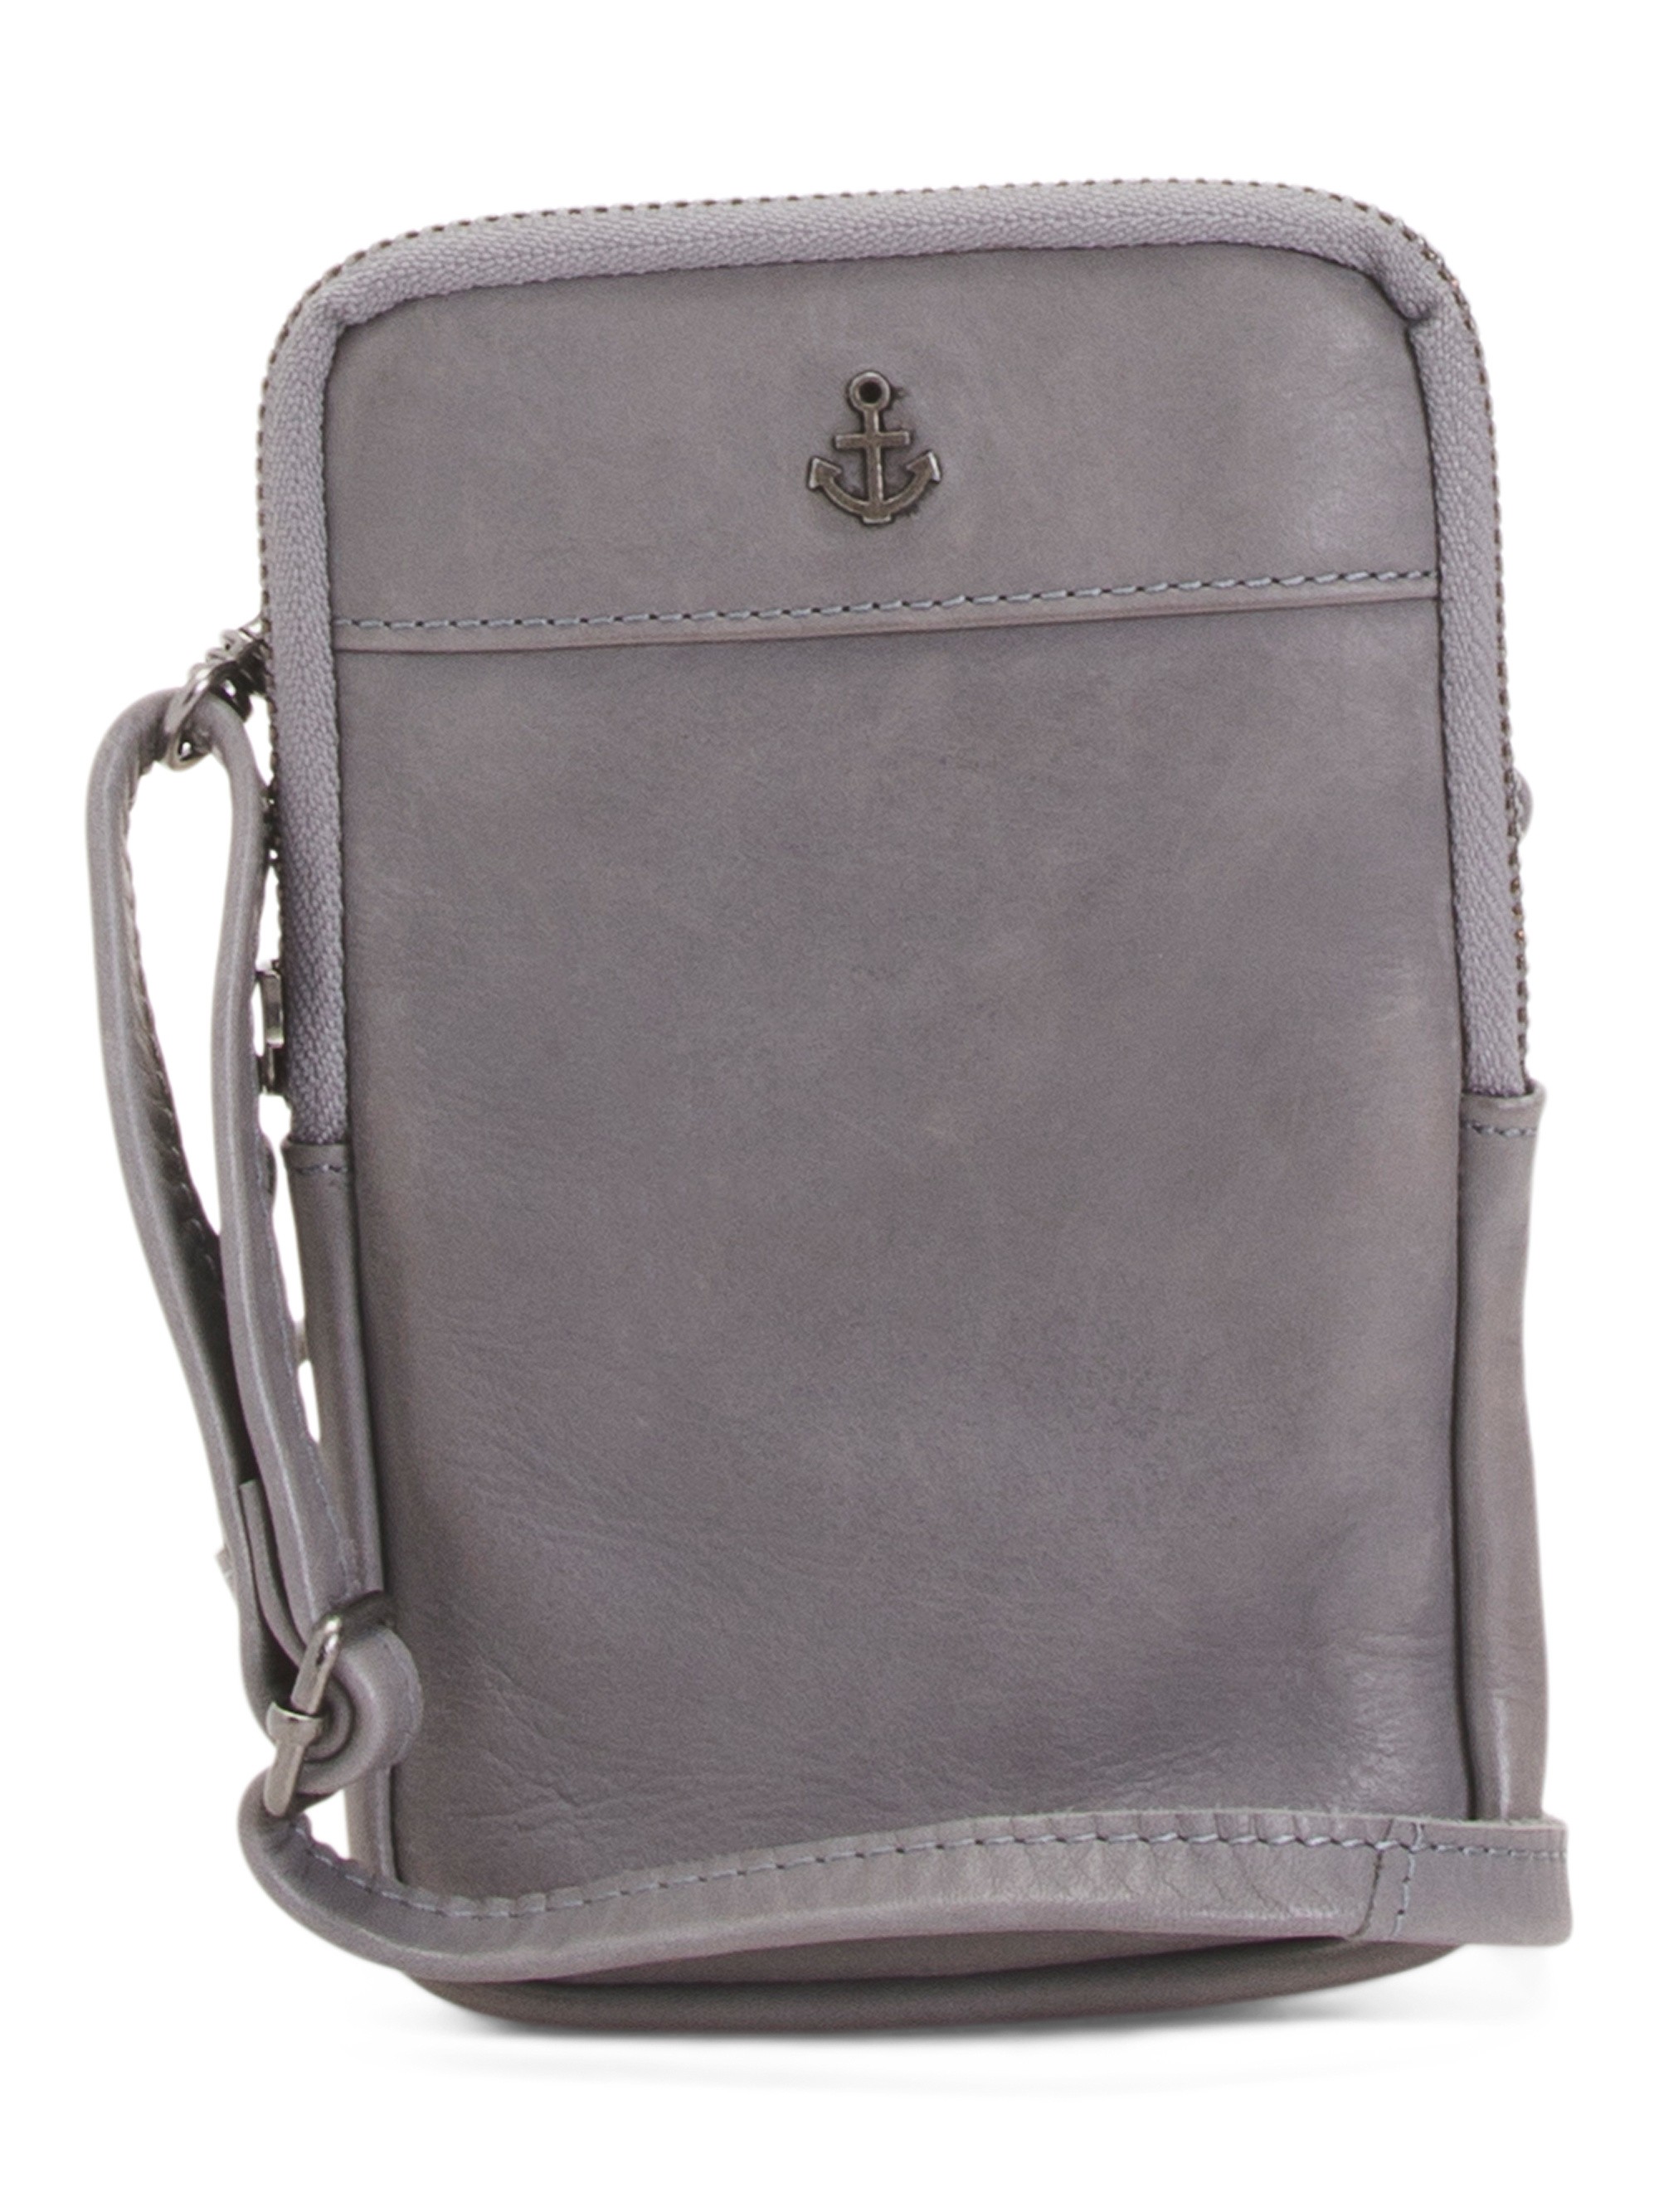 Royce Leather Vaquetta Triple-Zip Crossbody Bag